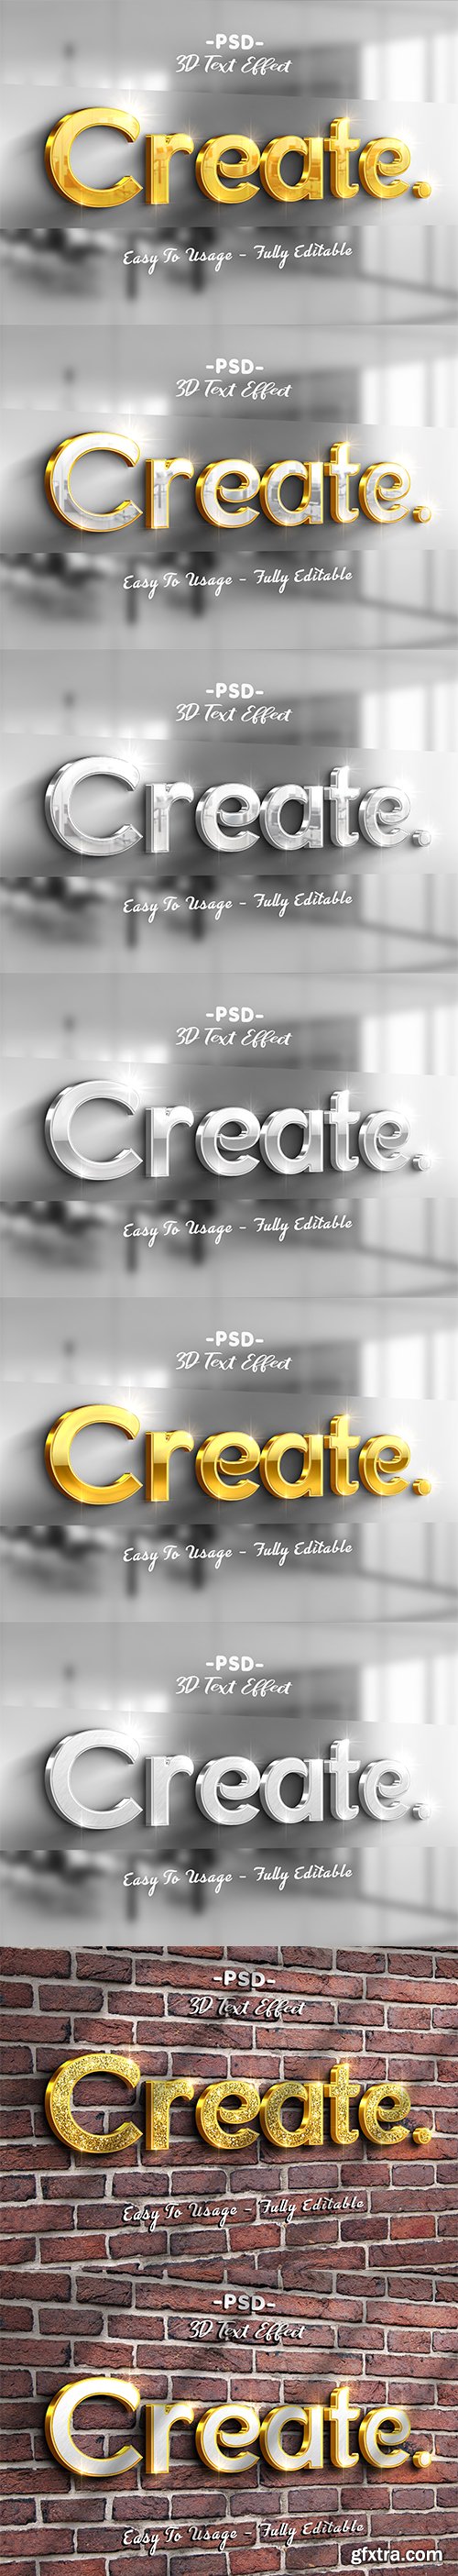 Create 3d golden text style effect